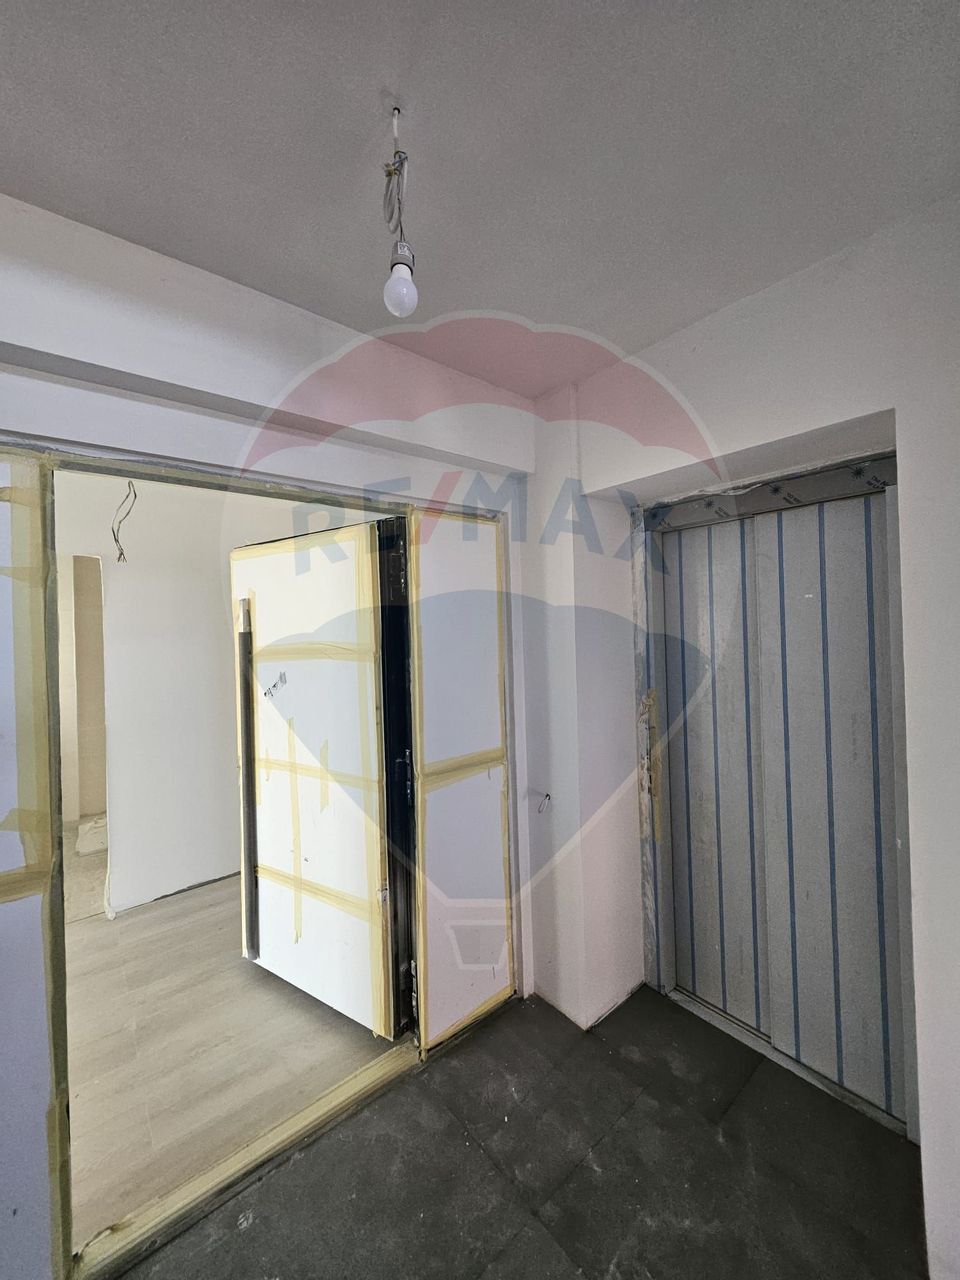 3 room Apartment for rent, Domenii area